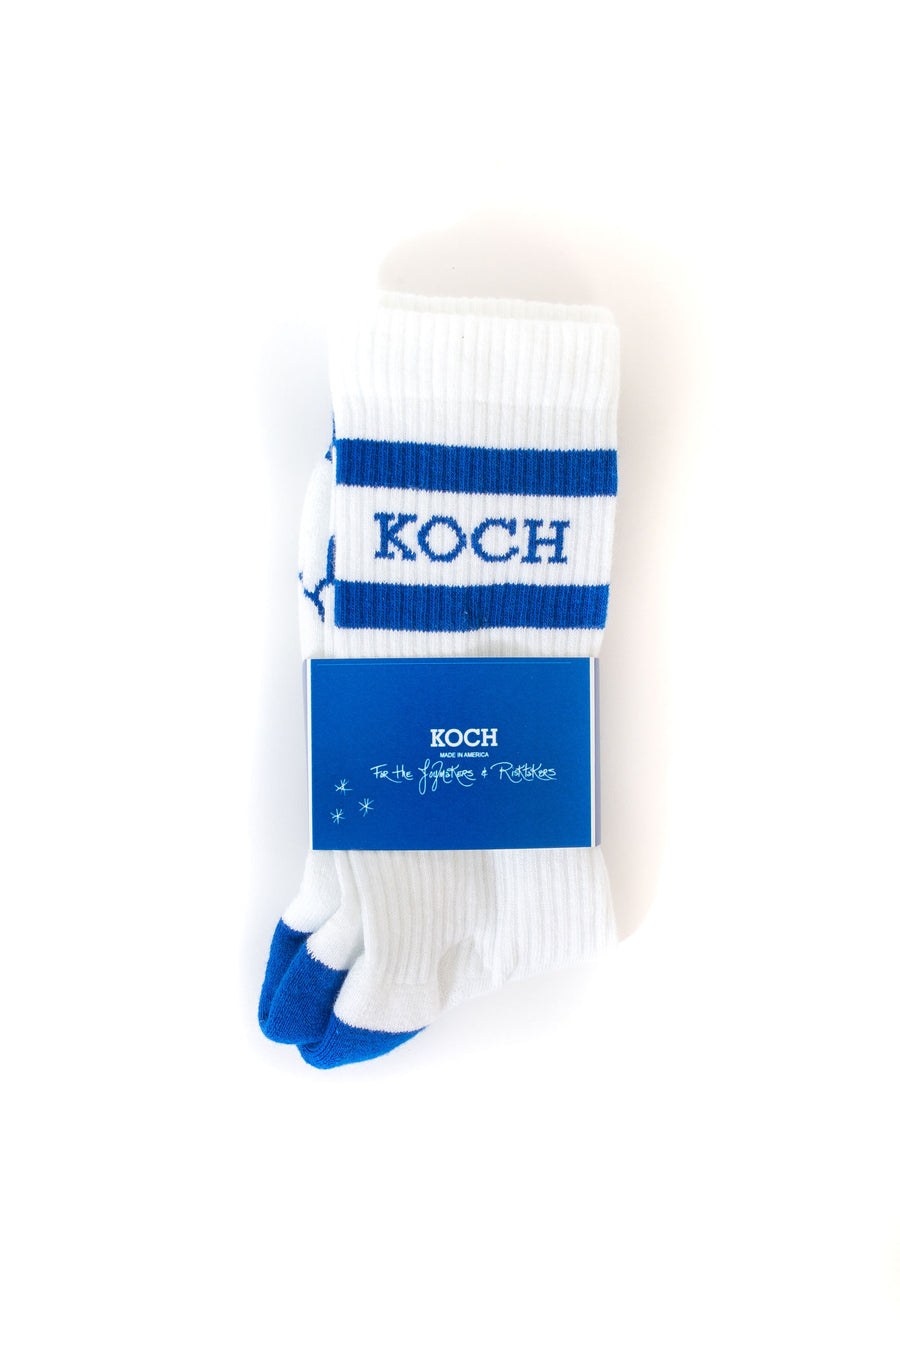 KOCH Classic Socks *Limited*Edition*